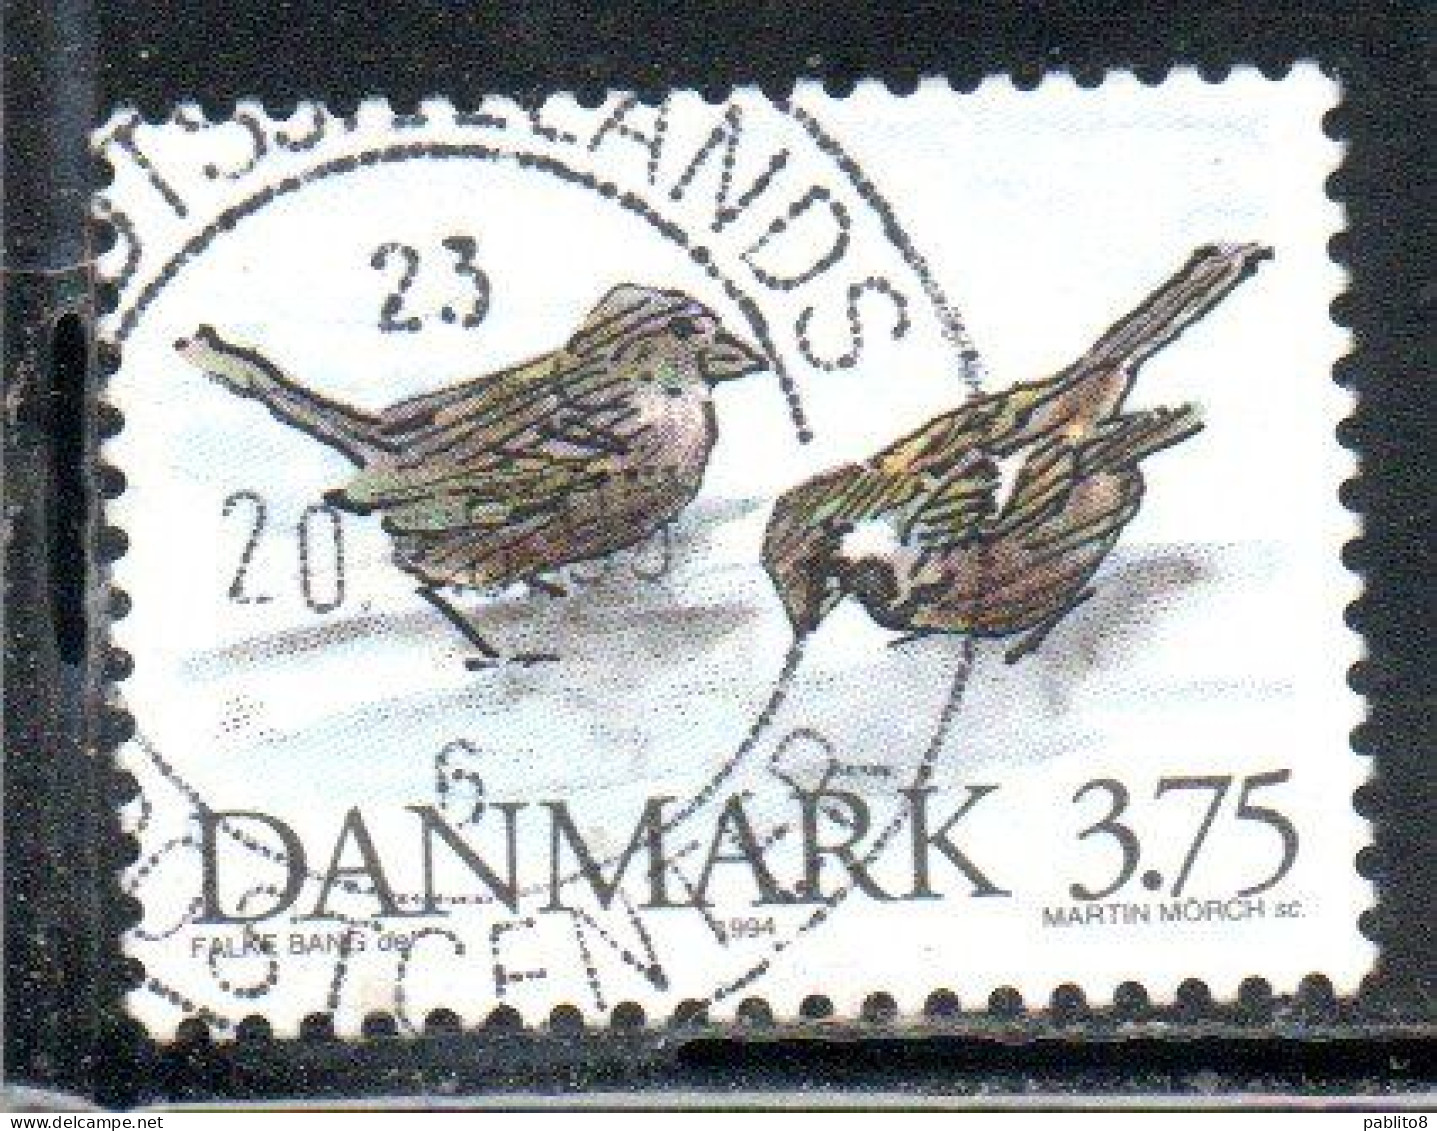 DANEMARK DANMARK DENMARK DANIMARCA 1994 WILD FAUNA ANIMALS BIRDS HOUSE SPARROWS 3.75k USED USATO OBLITERE' - Gebruikt